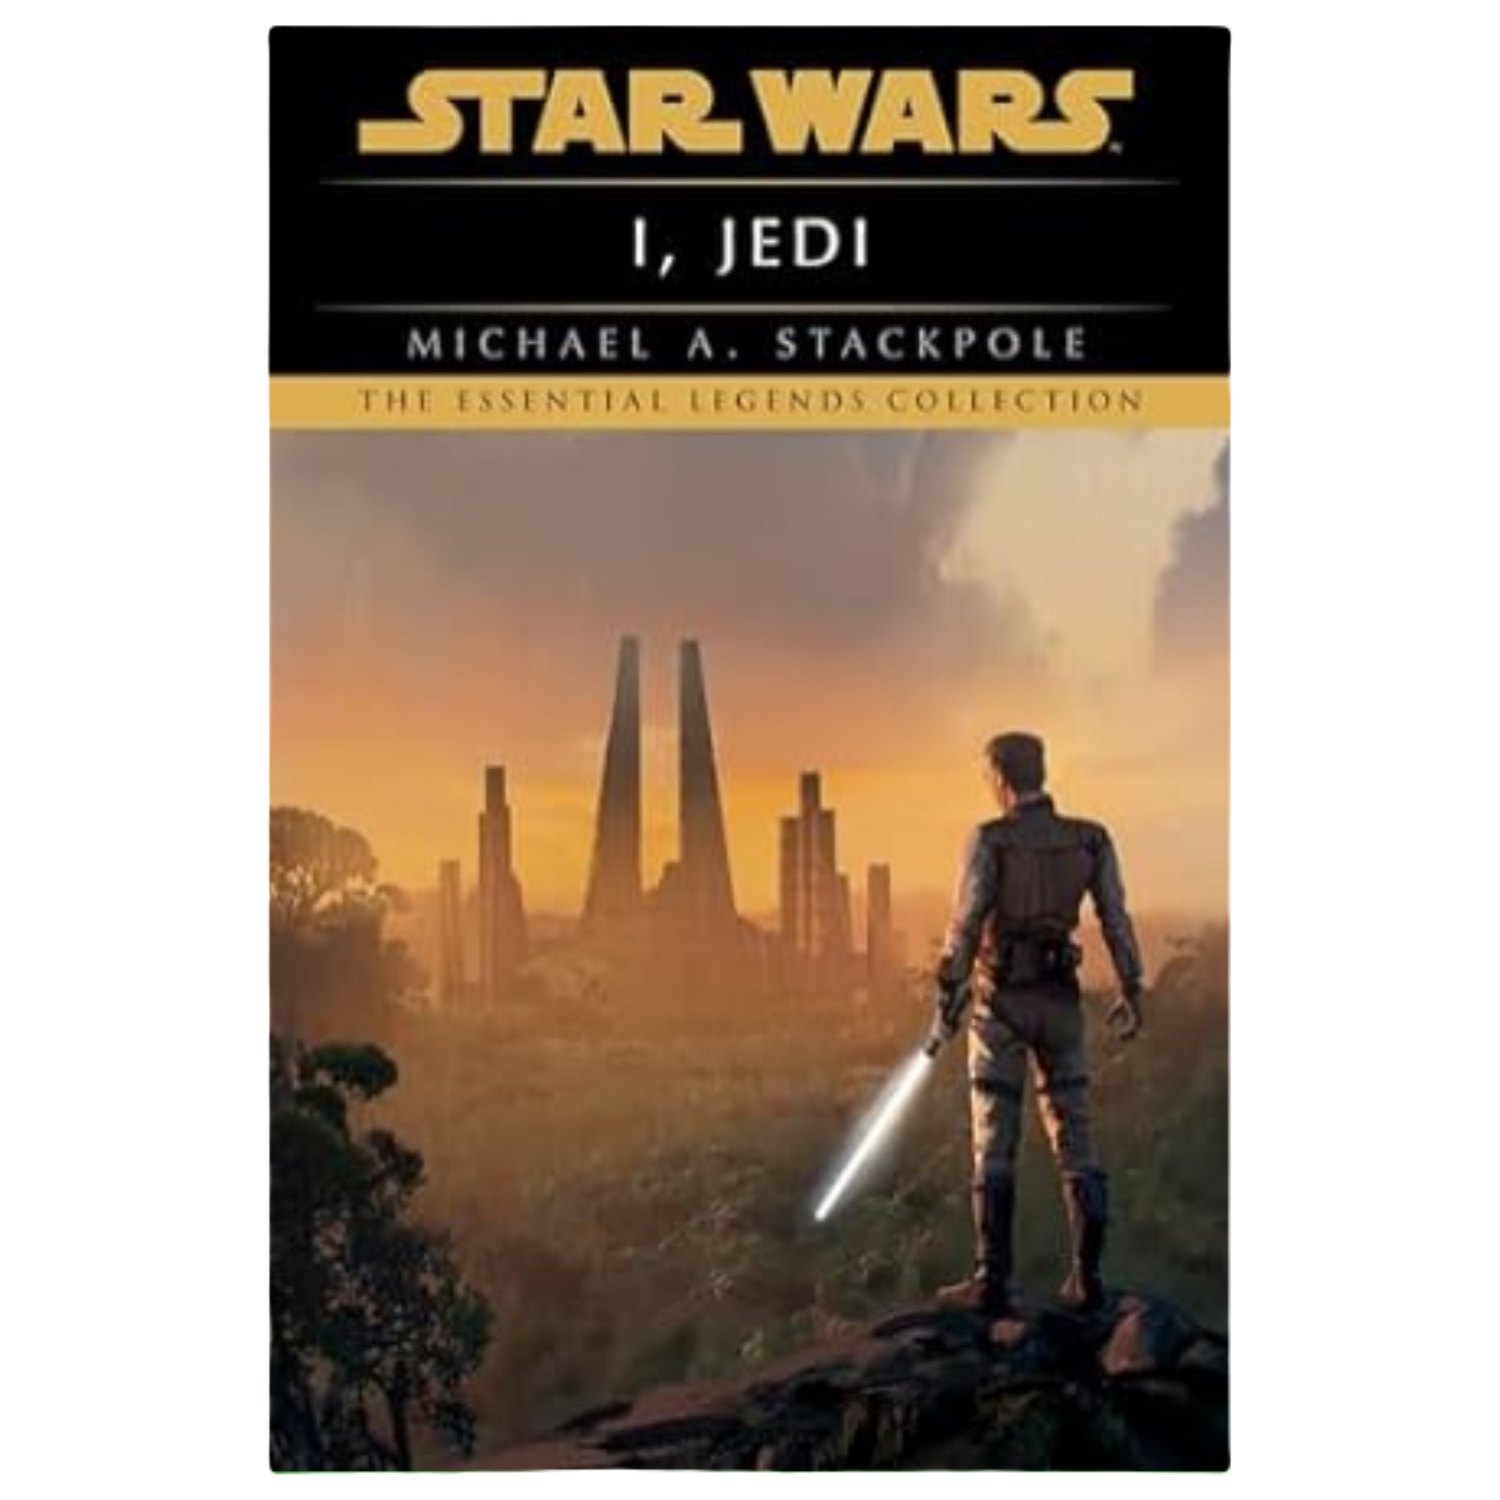 I, Jedi by Micheal A. Stackpole (1998)